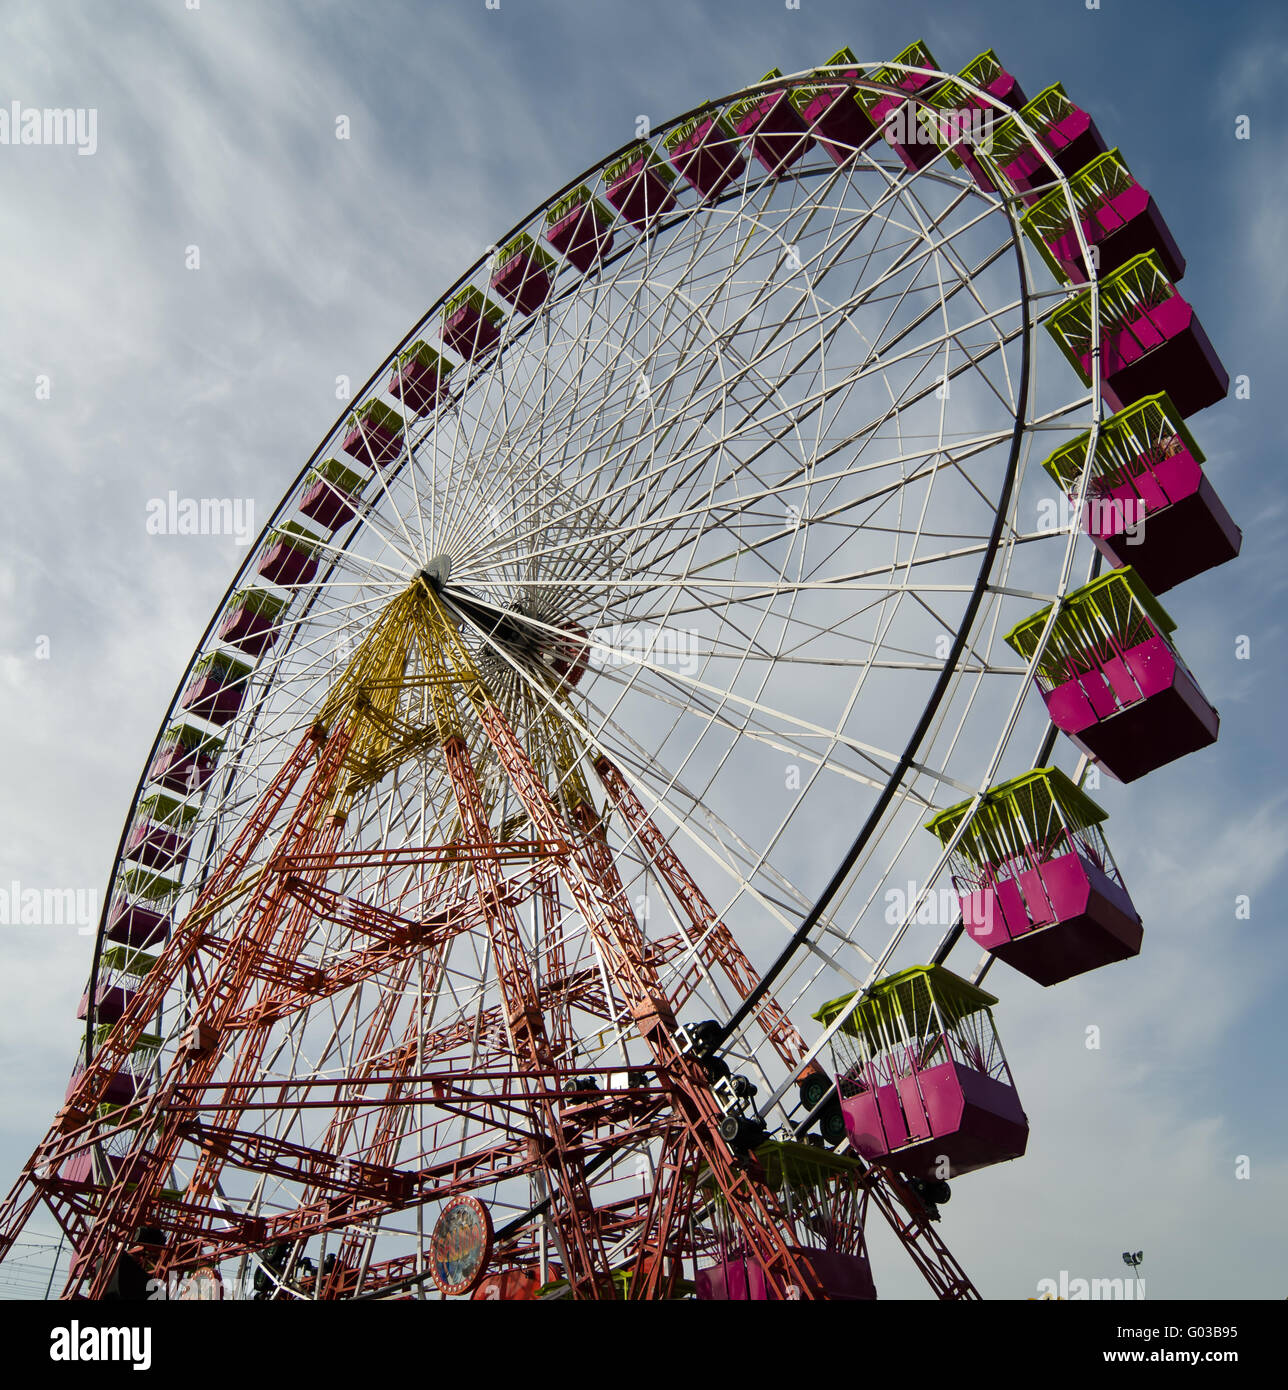 Ferris wheel of fair and amusement park Stock Photo